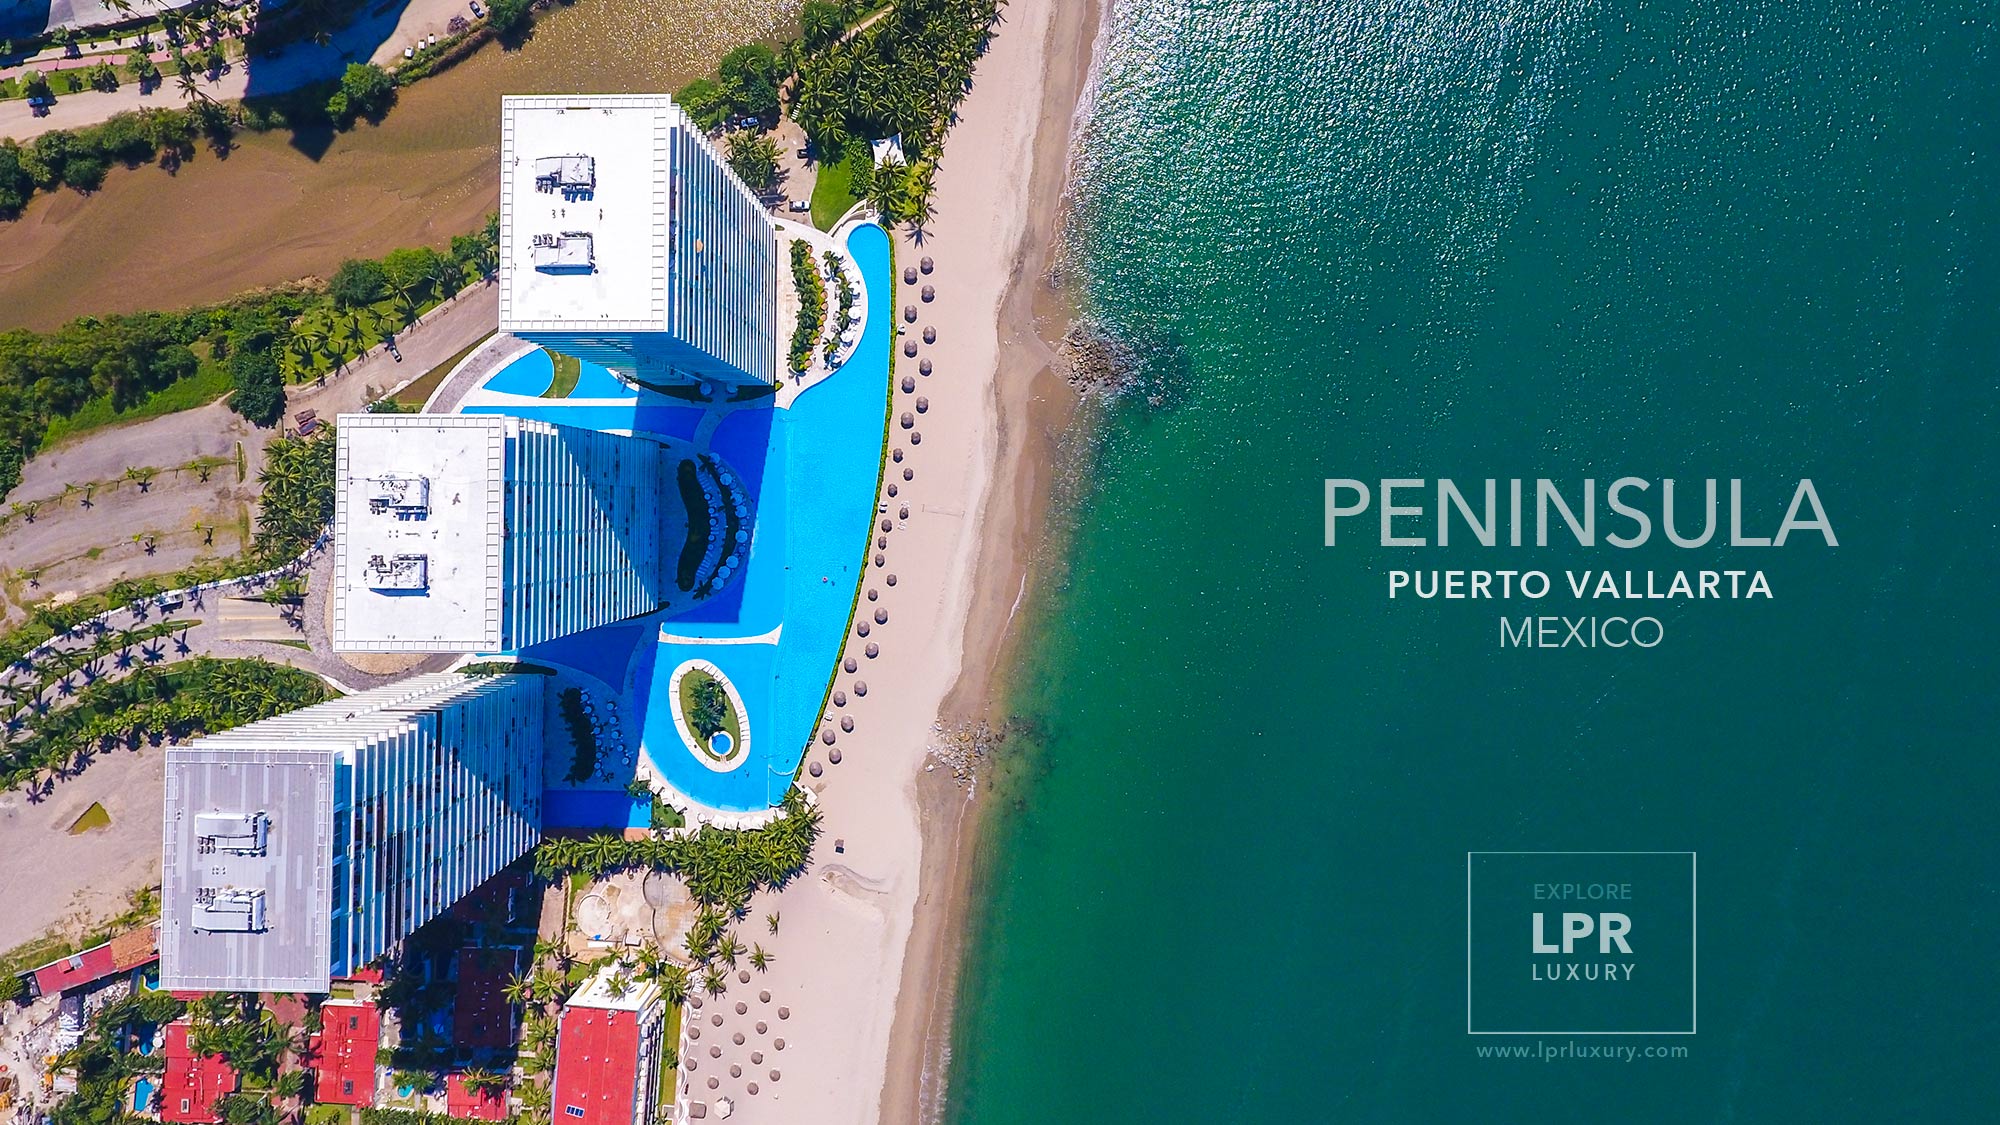 Peninsula Puerto Vallarta - Luxury condominiums for sale and rent - beachfront real estate condos and vacation rentals